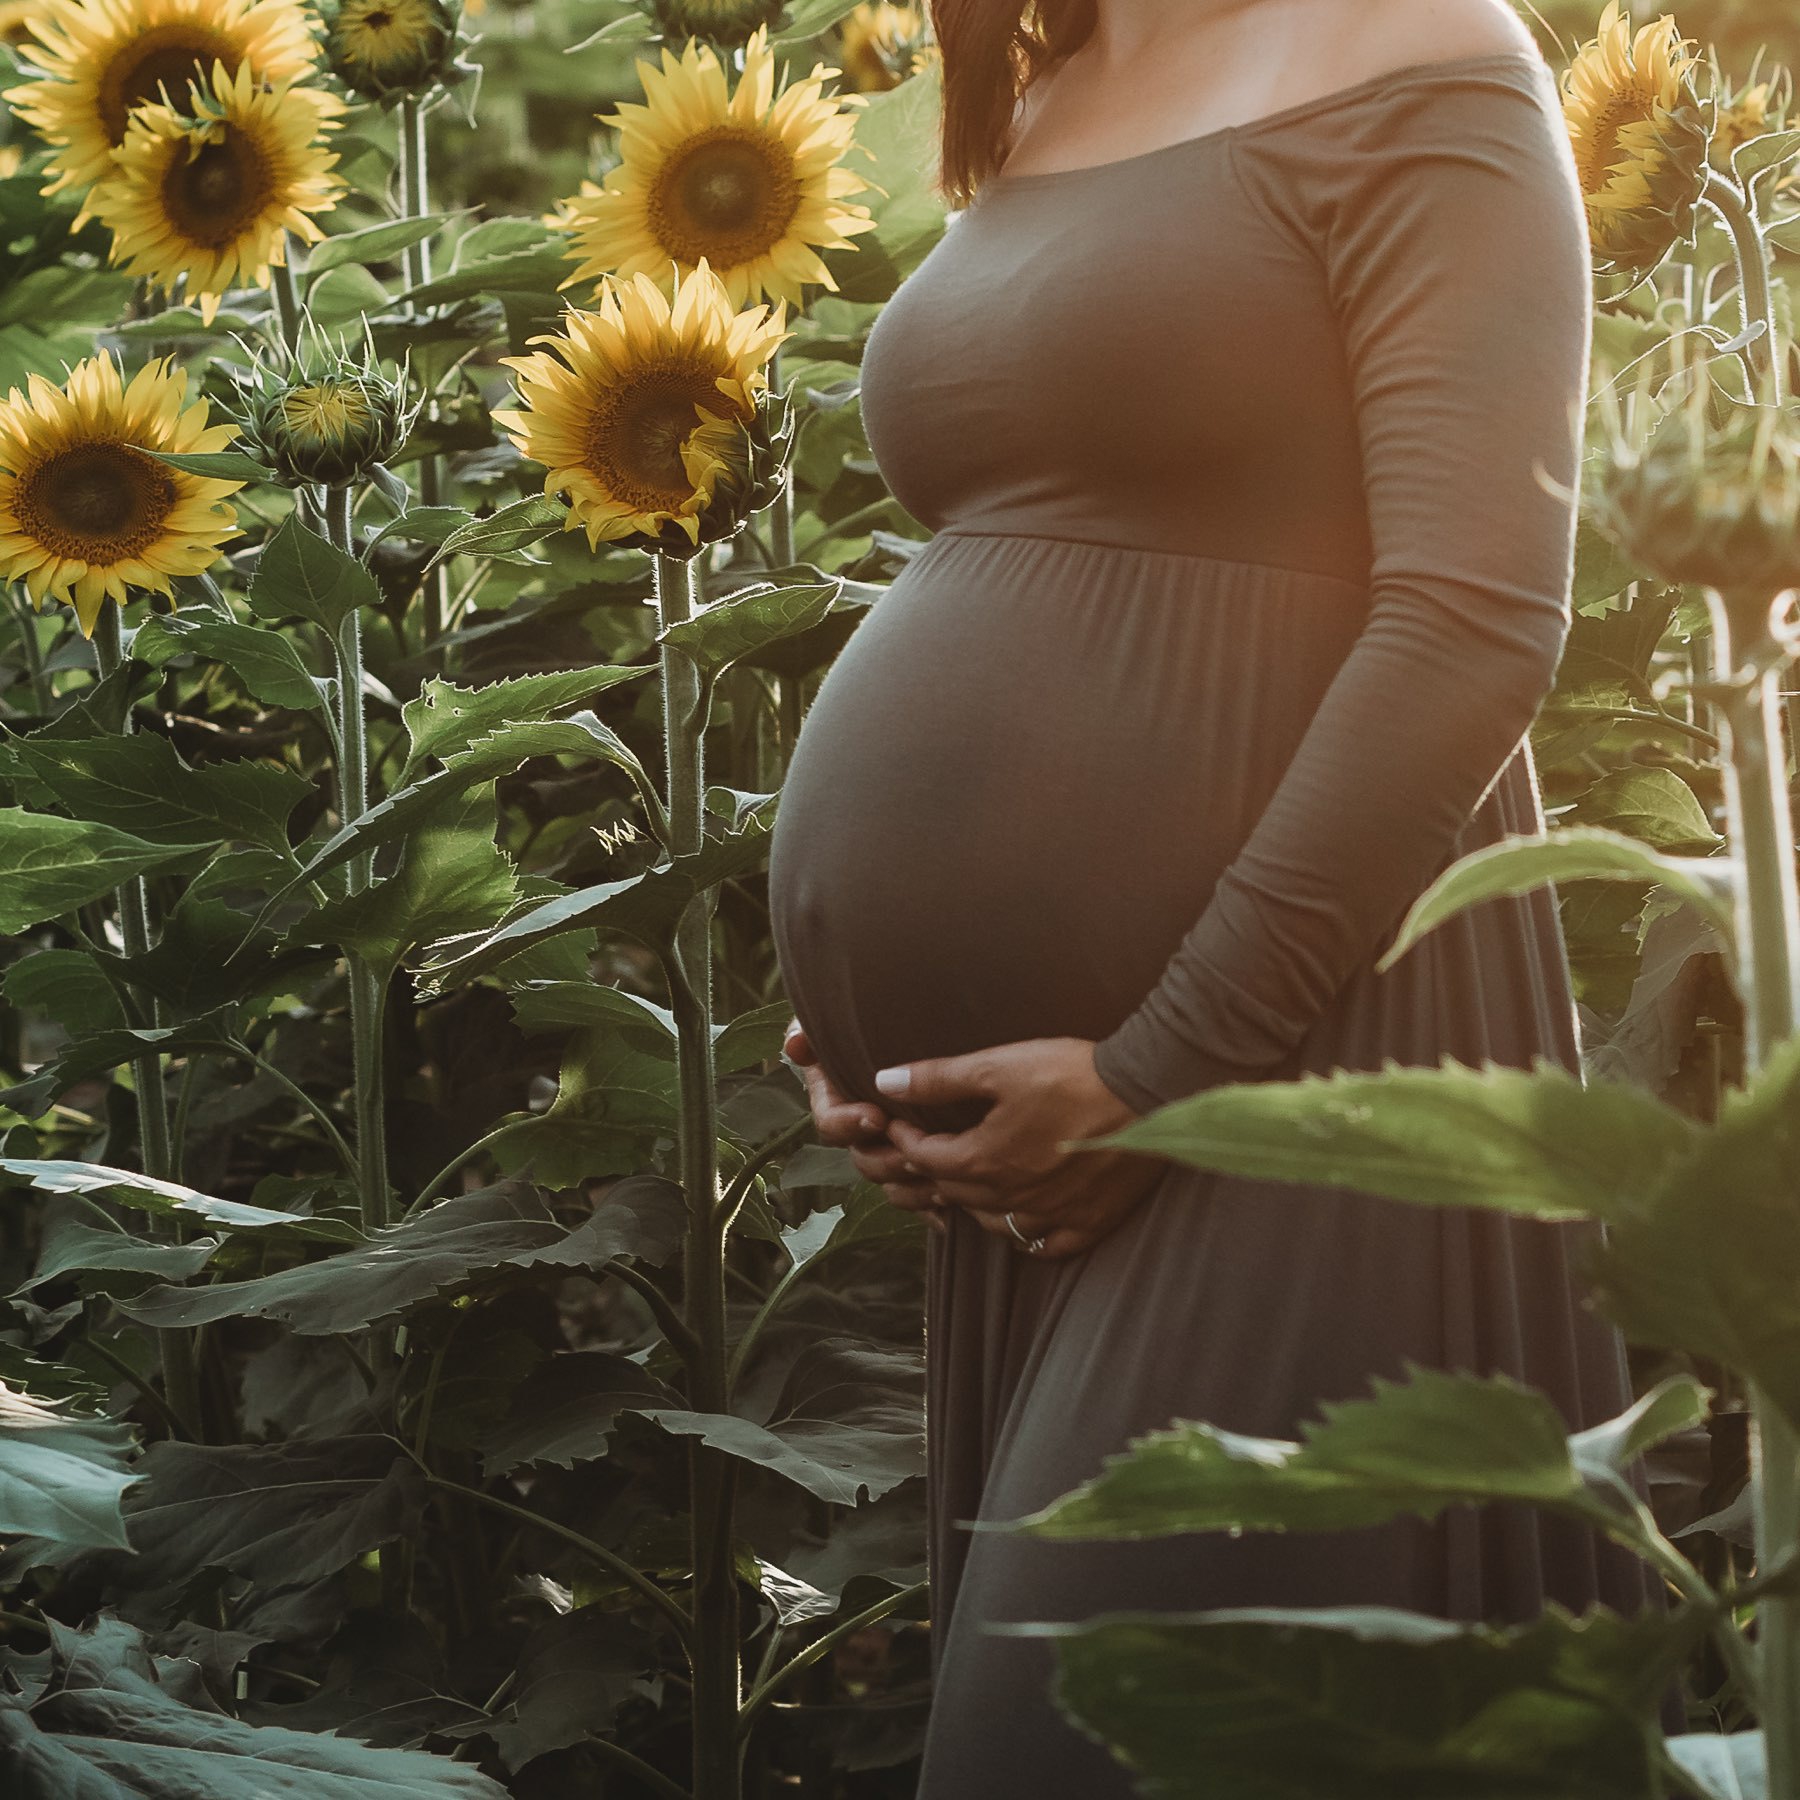 pregant woman standing among sunflowers